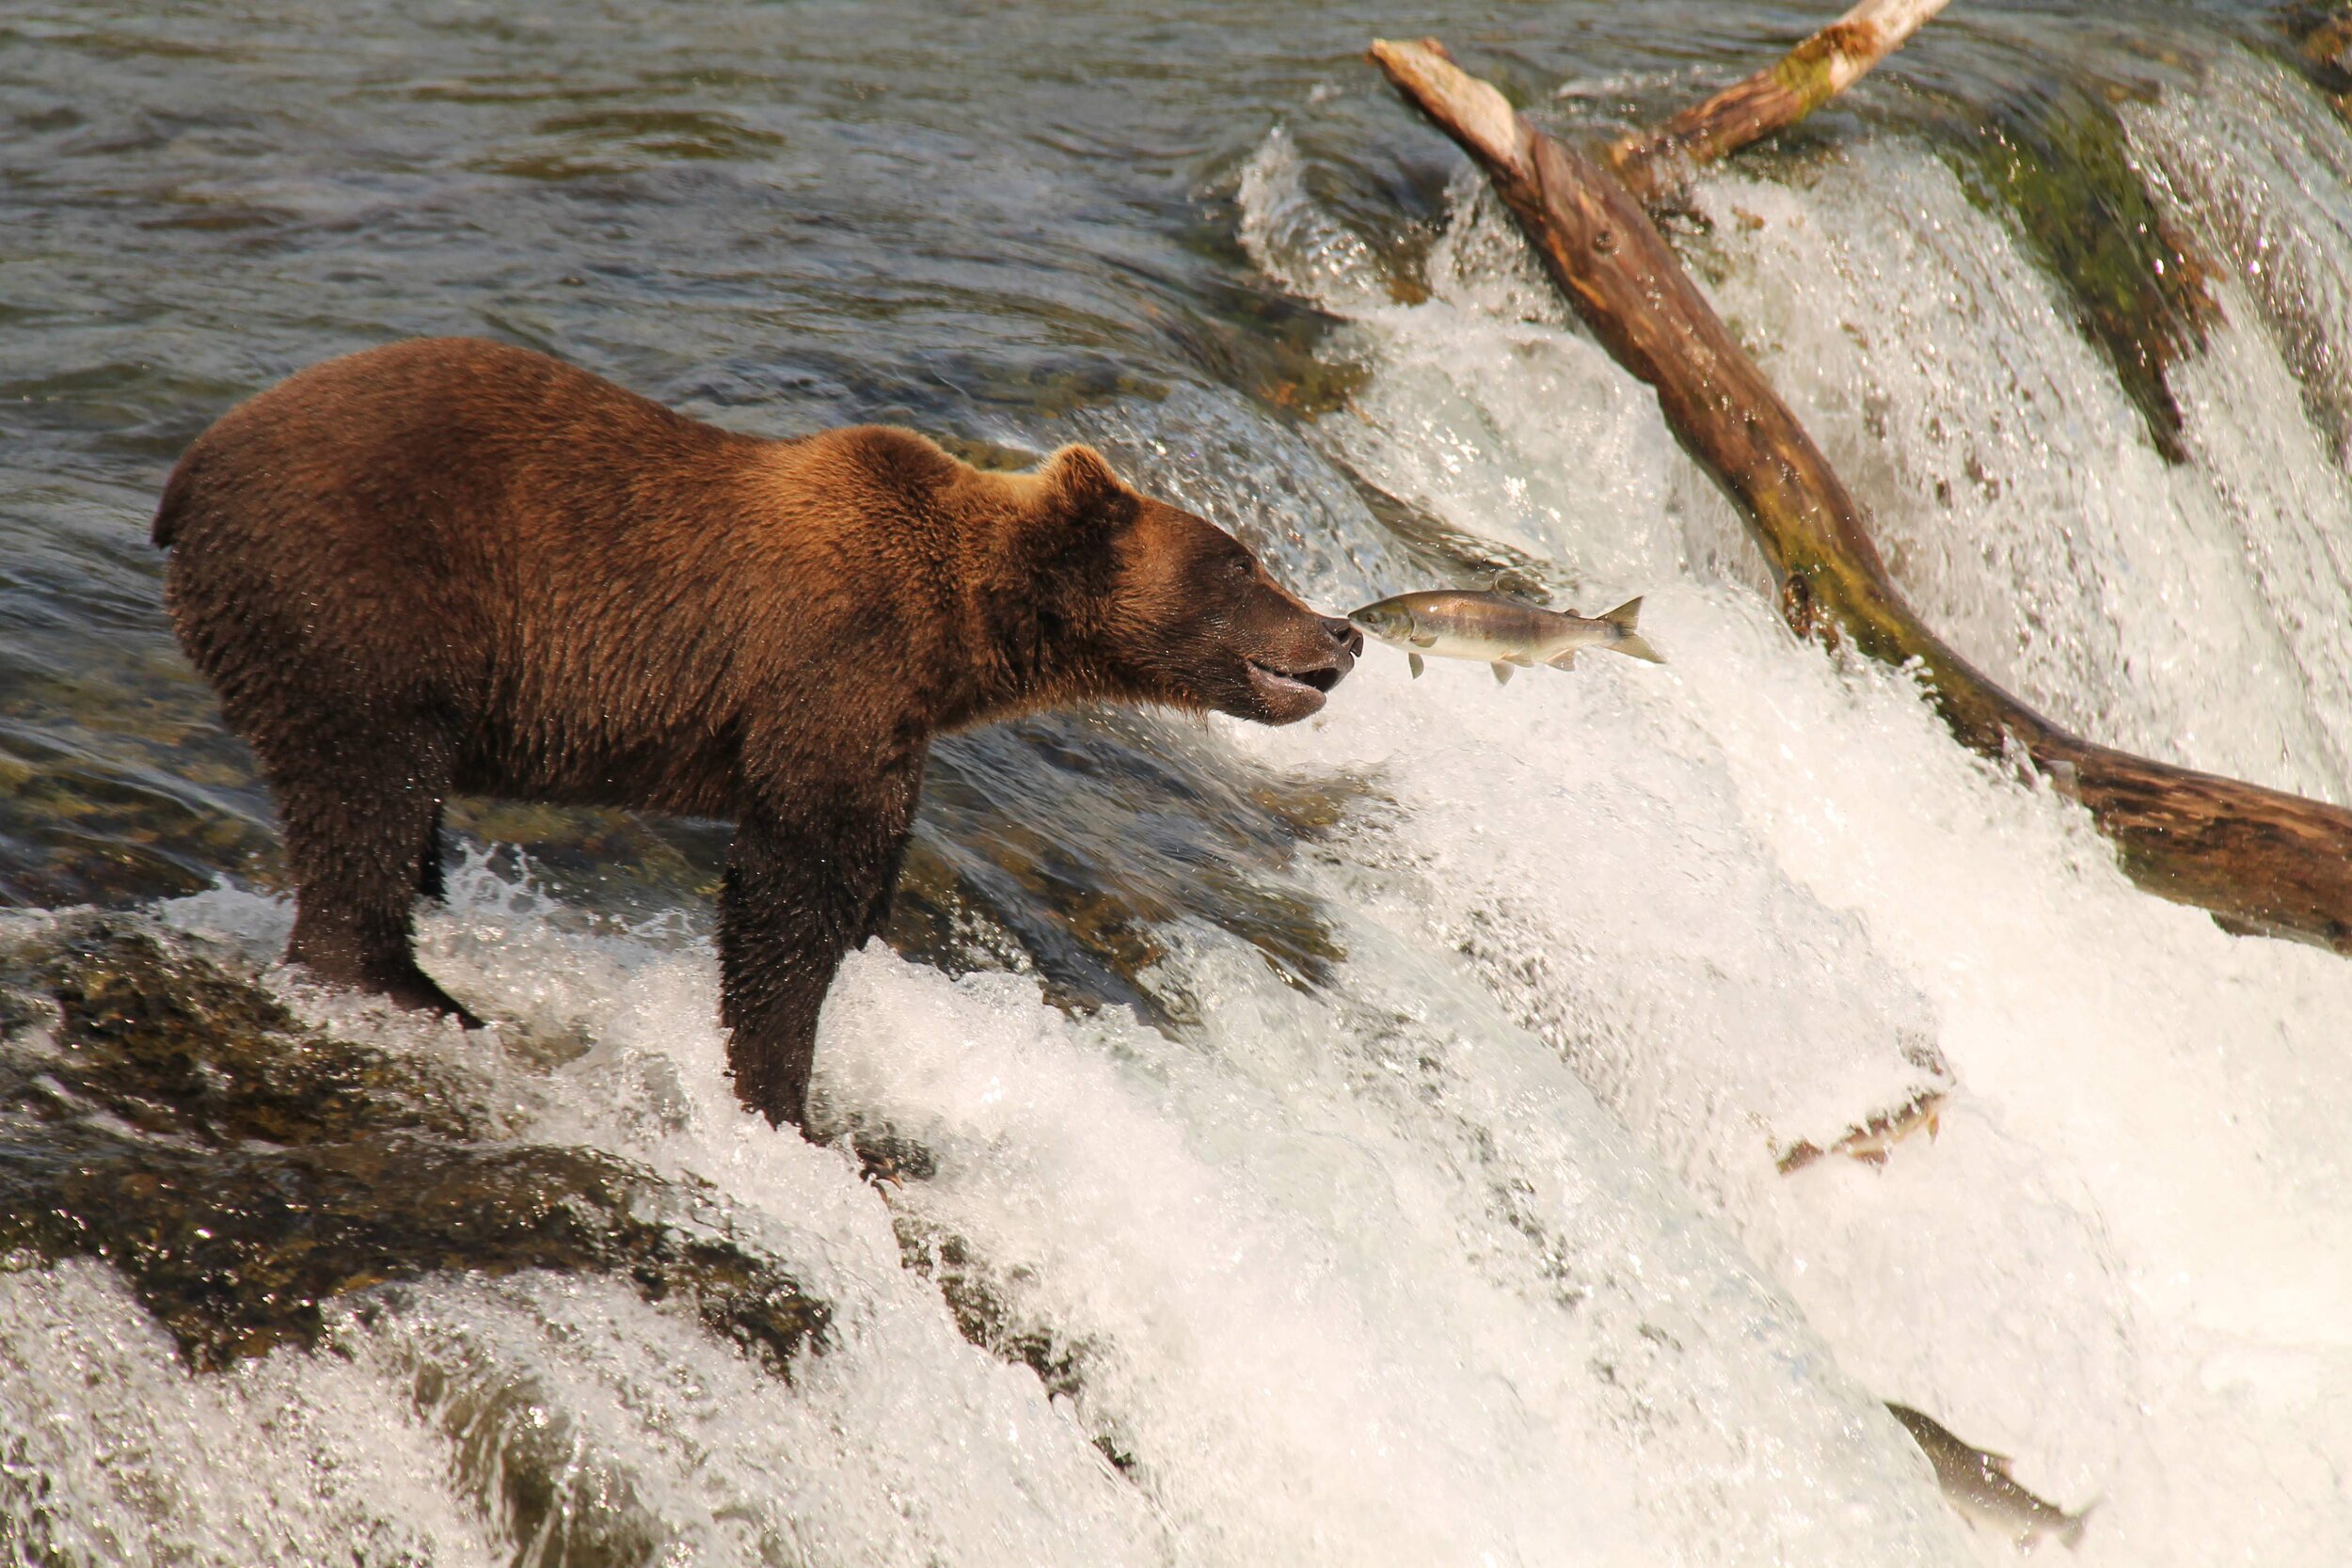  A brown bear catching salmon at Brooks Falls.  